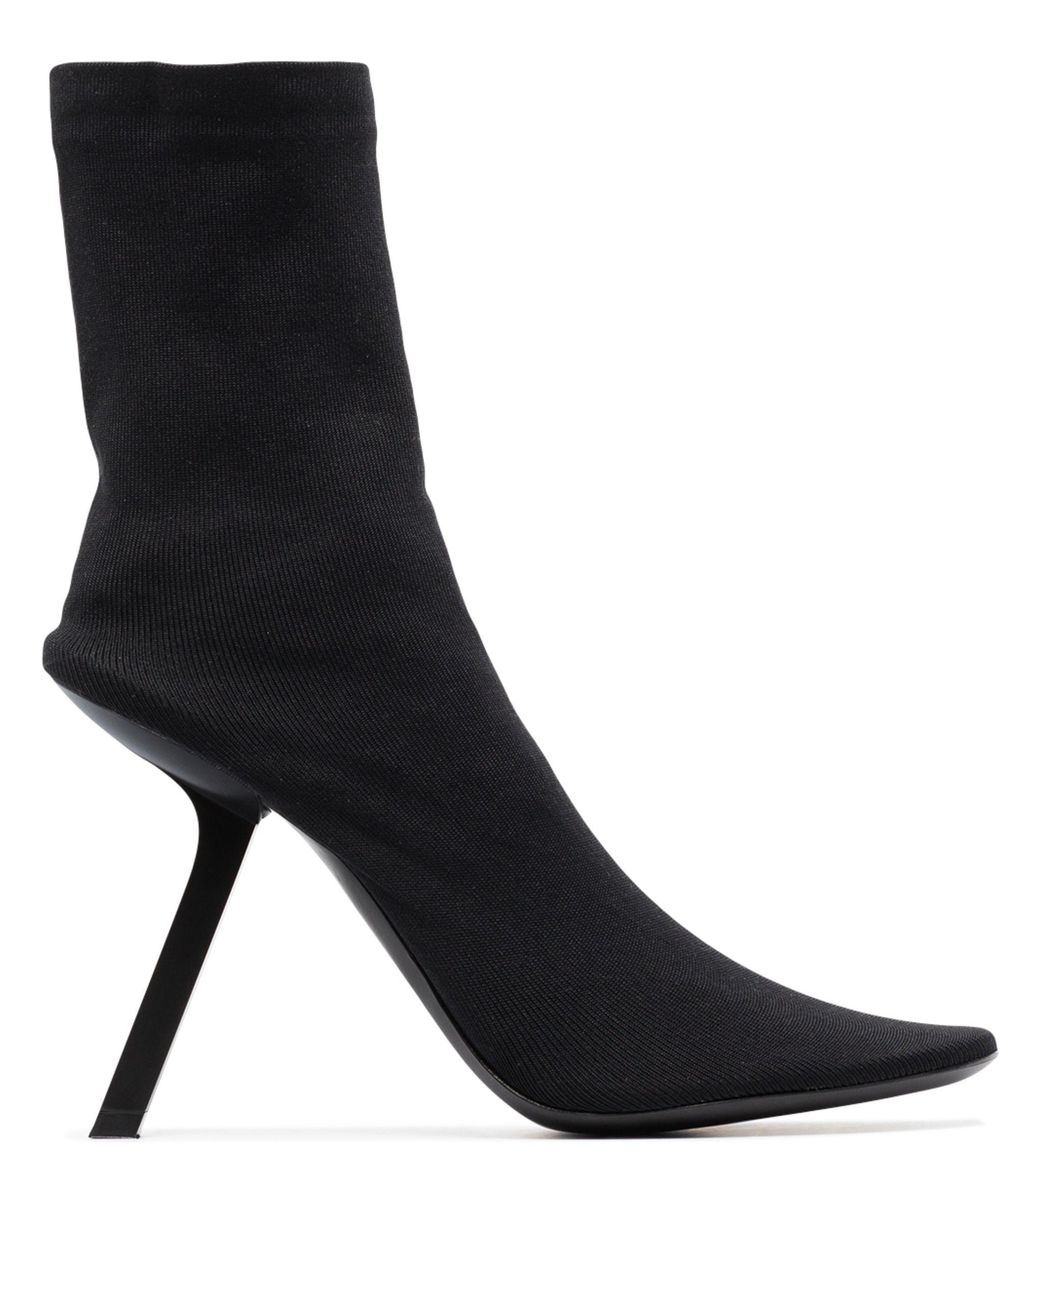 Balenciaga Tight 110 Ankle Boots in Black | Lyst Australia